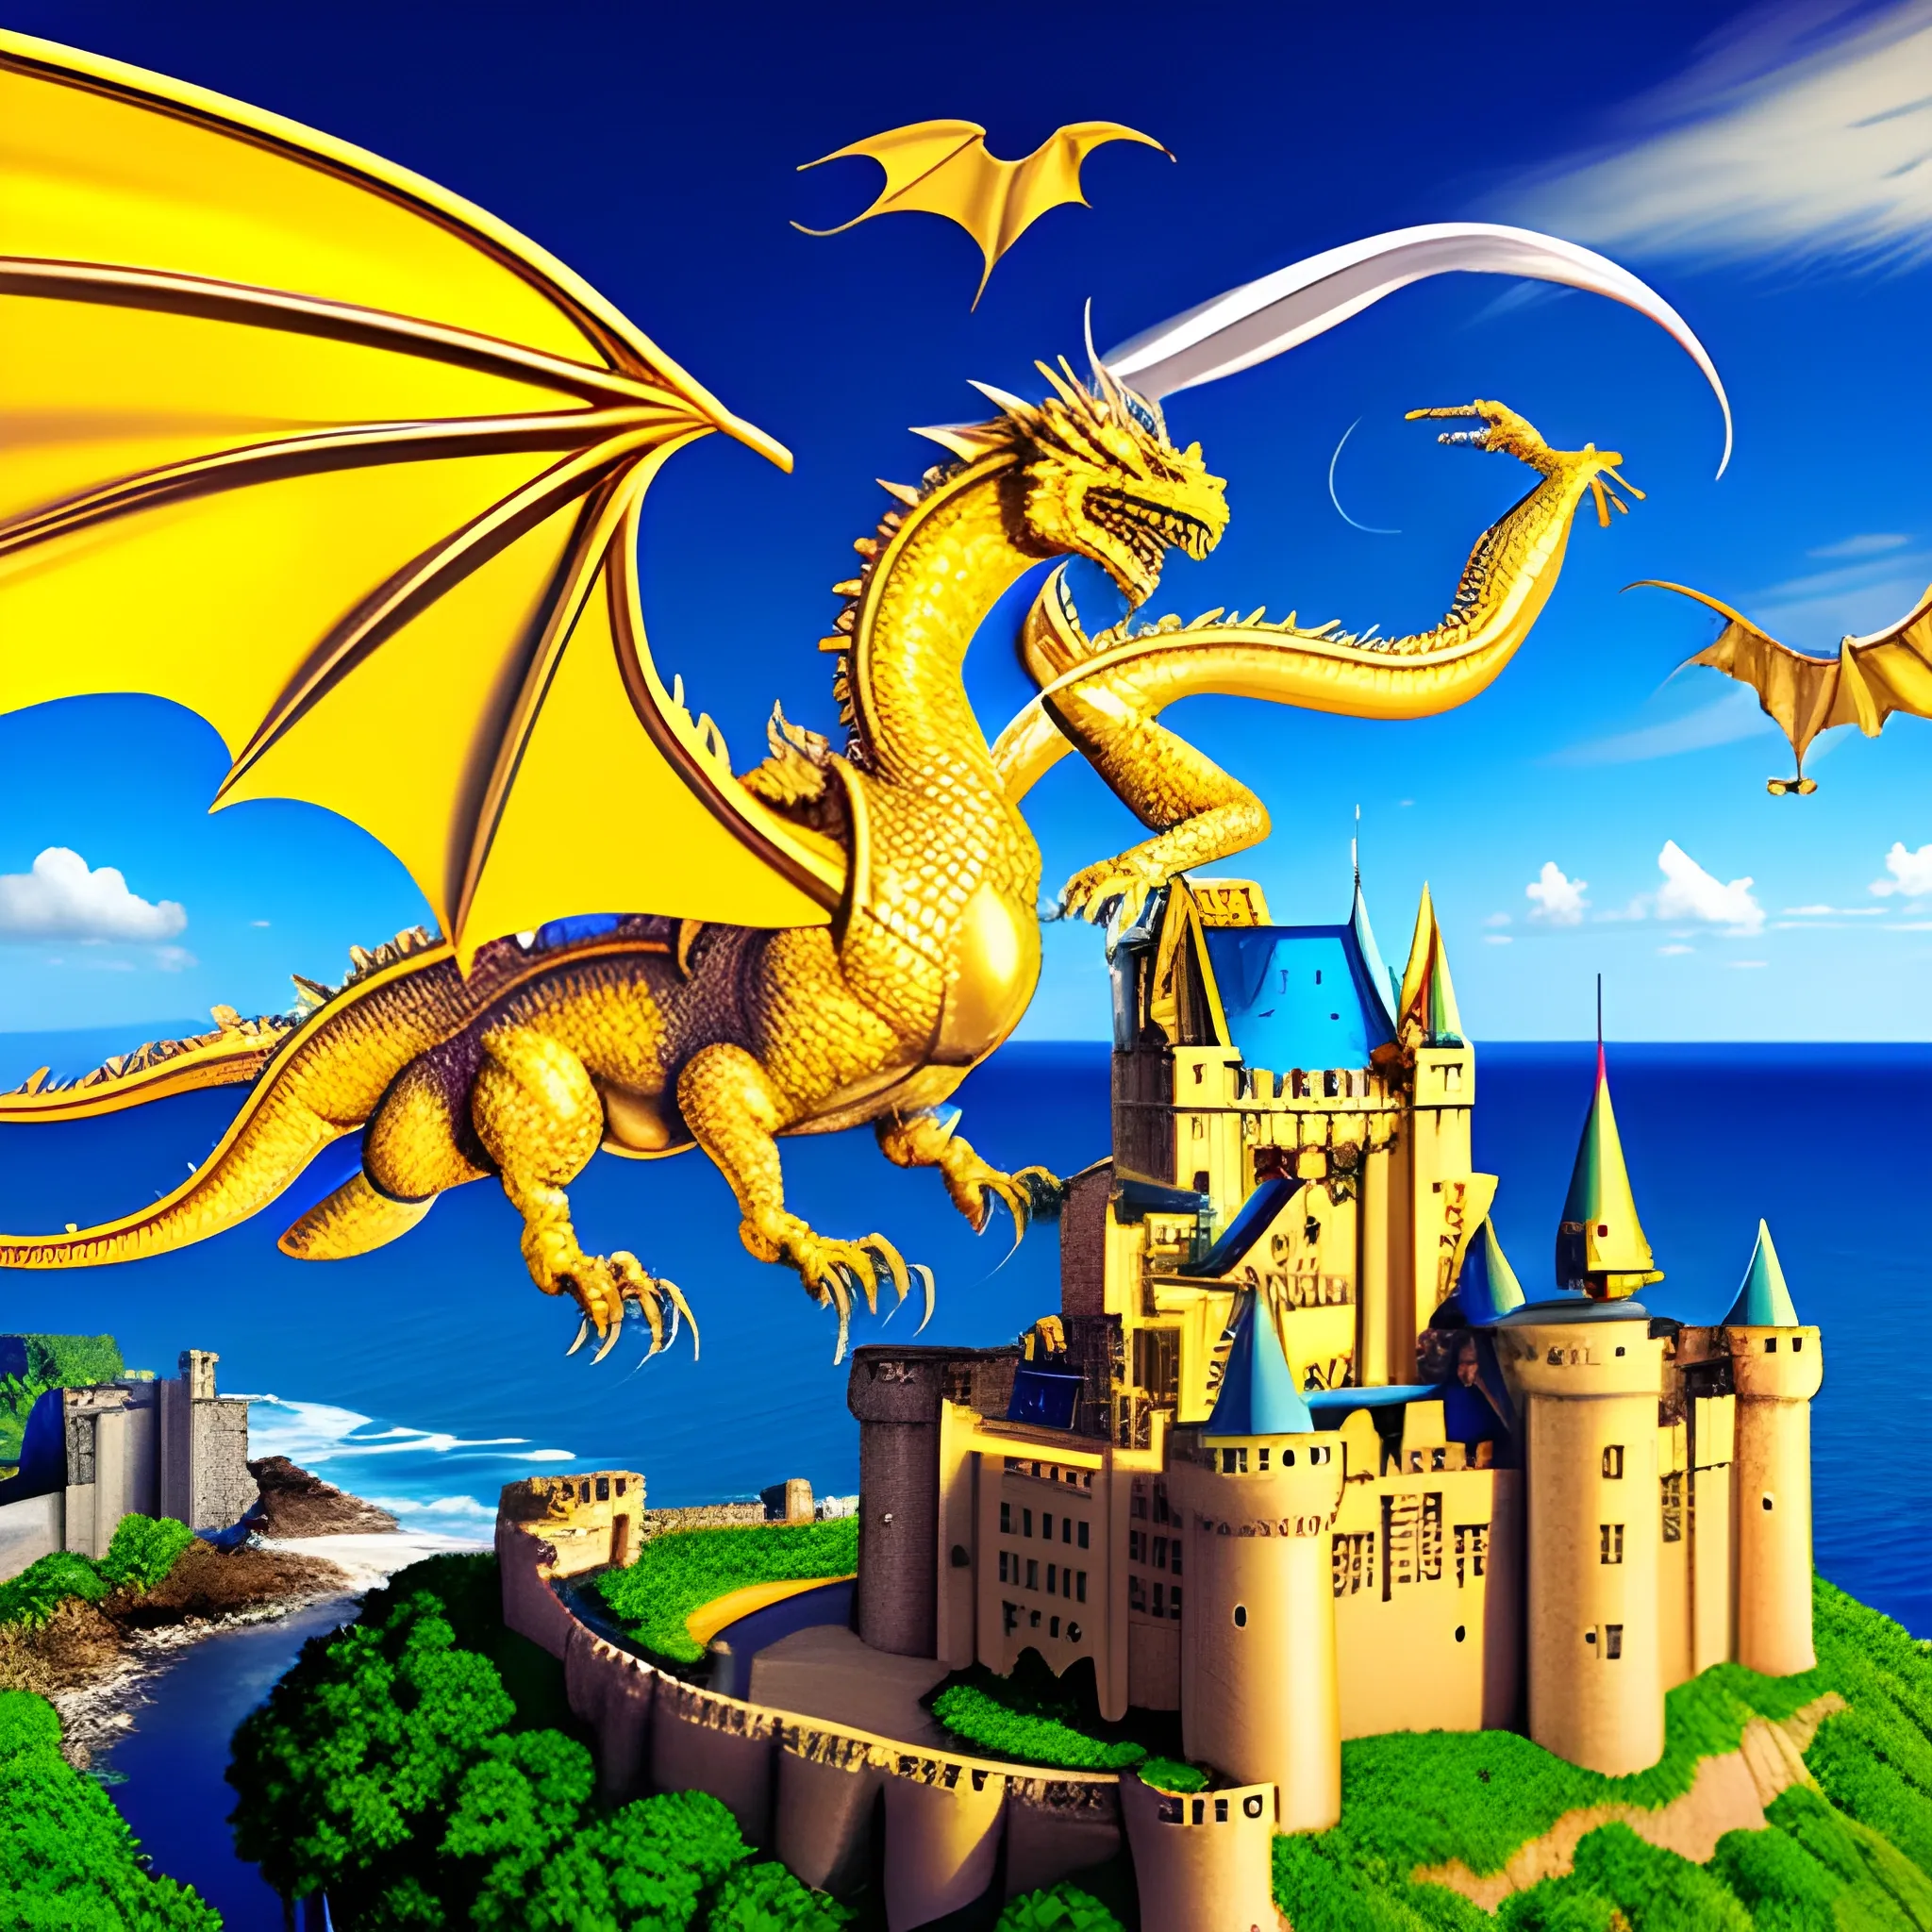 Widescreen gold dragon soaring over a castle on a seashore, Trippy